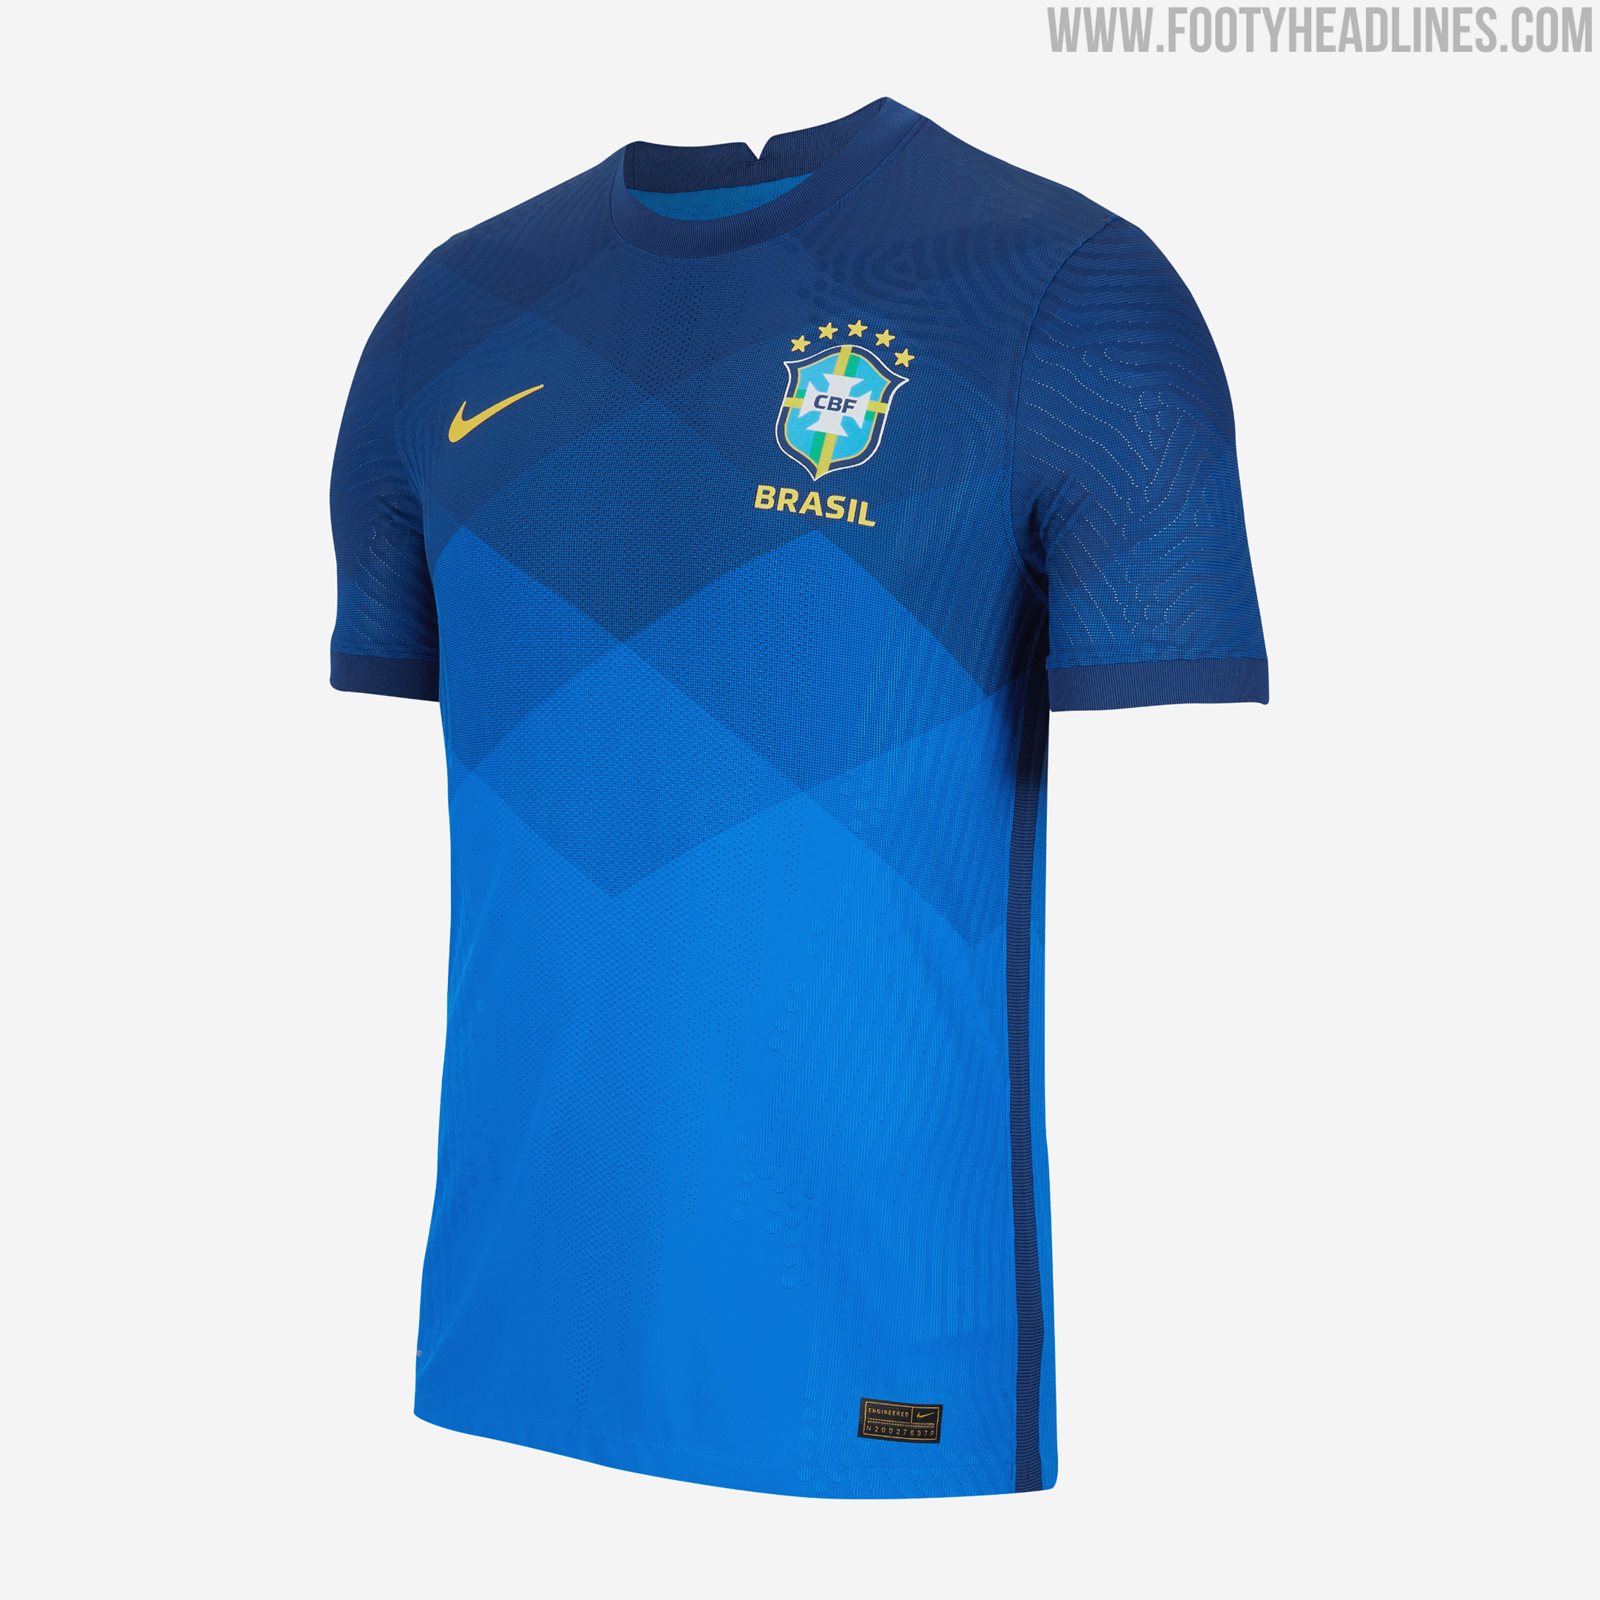 Brazil 2022 World Cup Kit / PES 2020 | BRAZIL vs ITALY | FIFA WORLD CUP